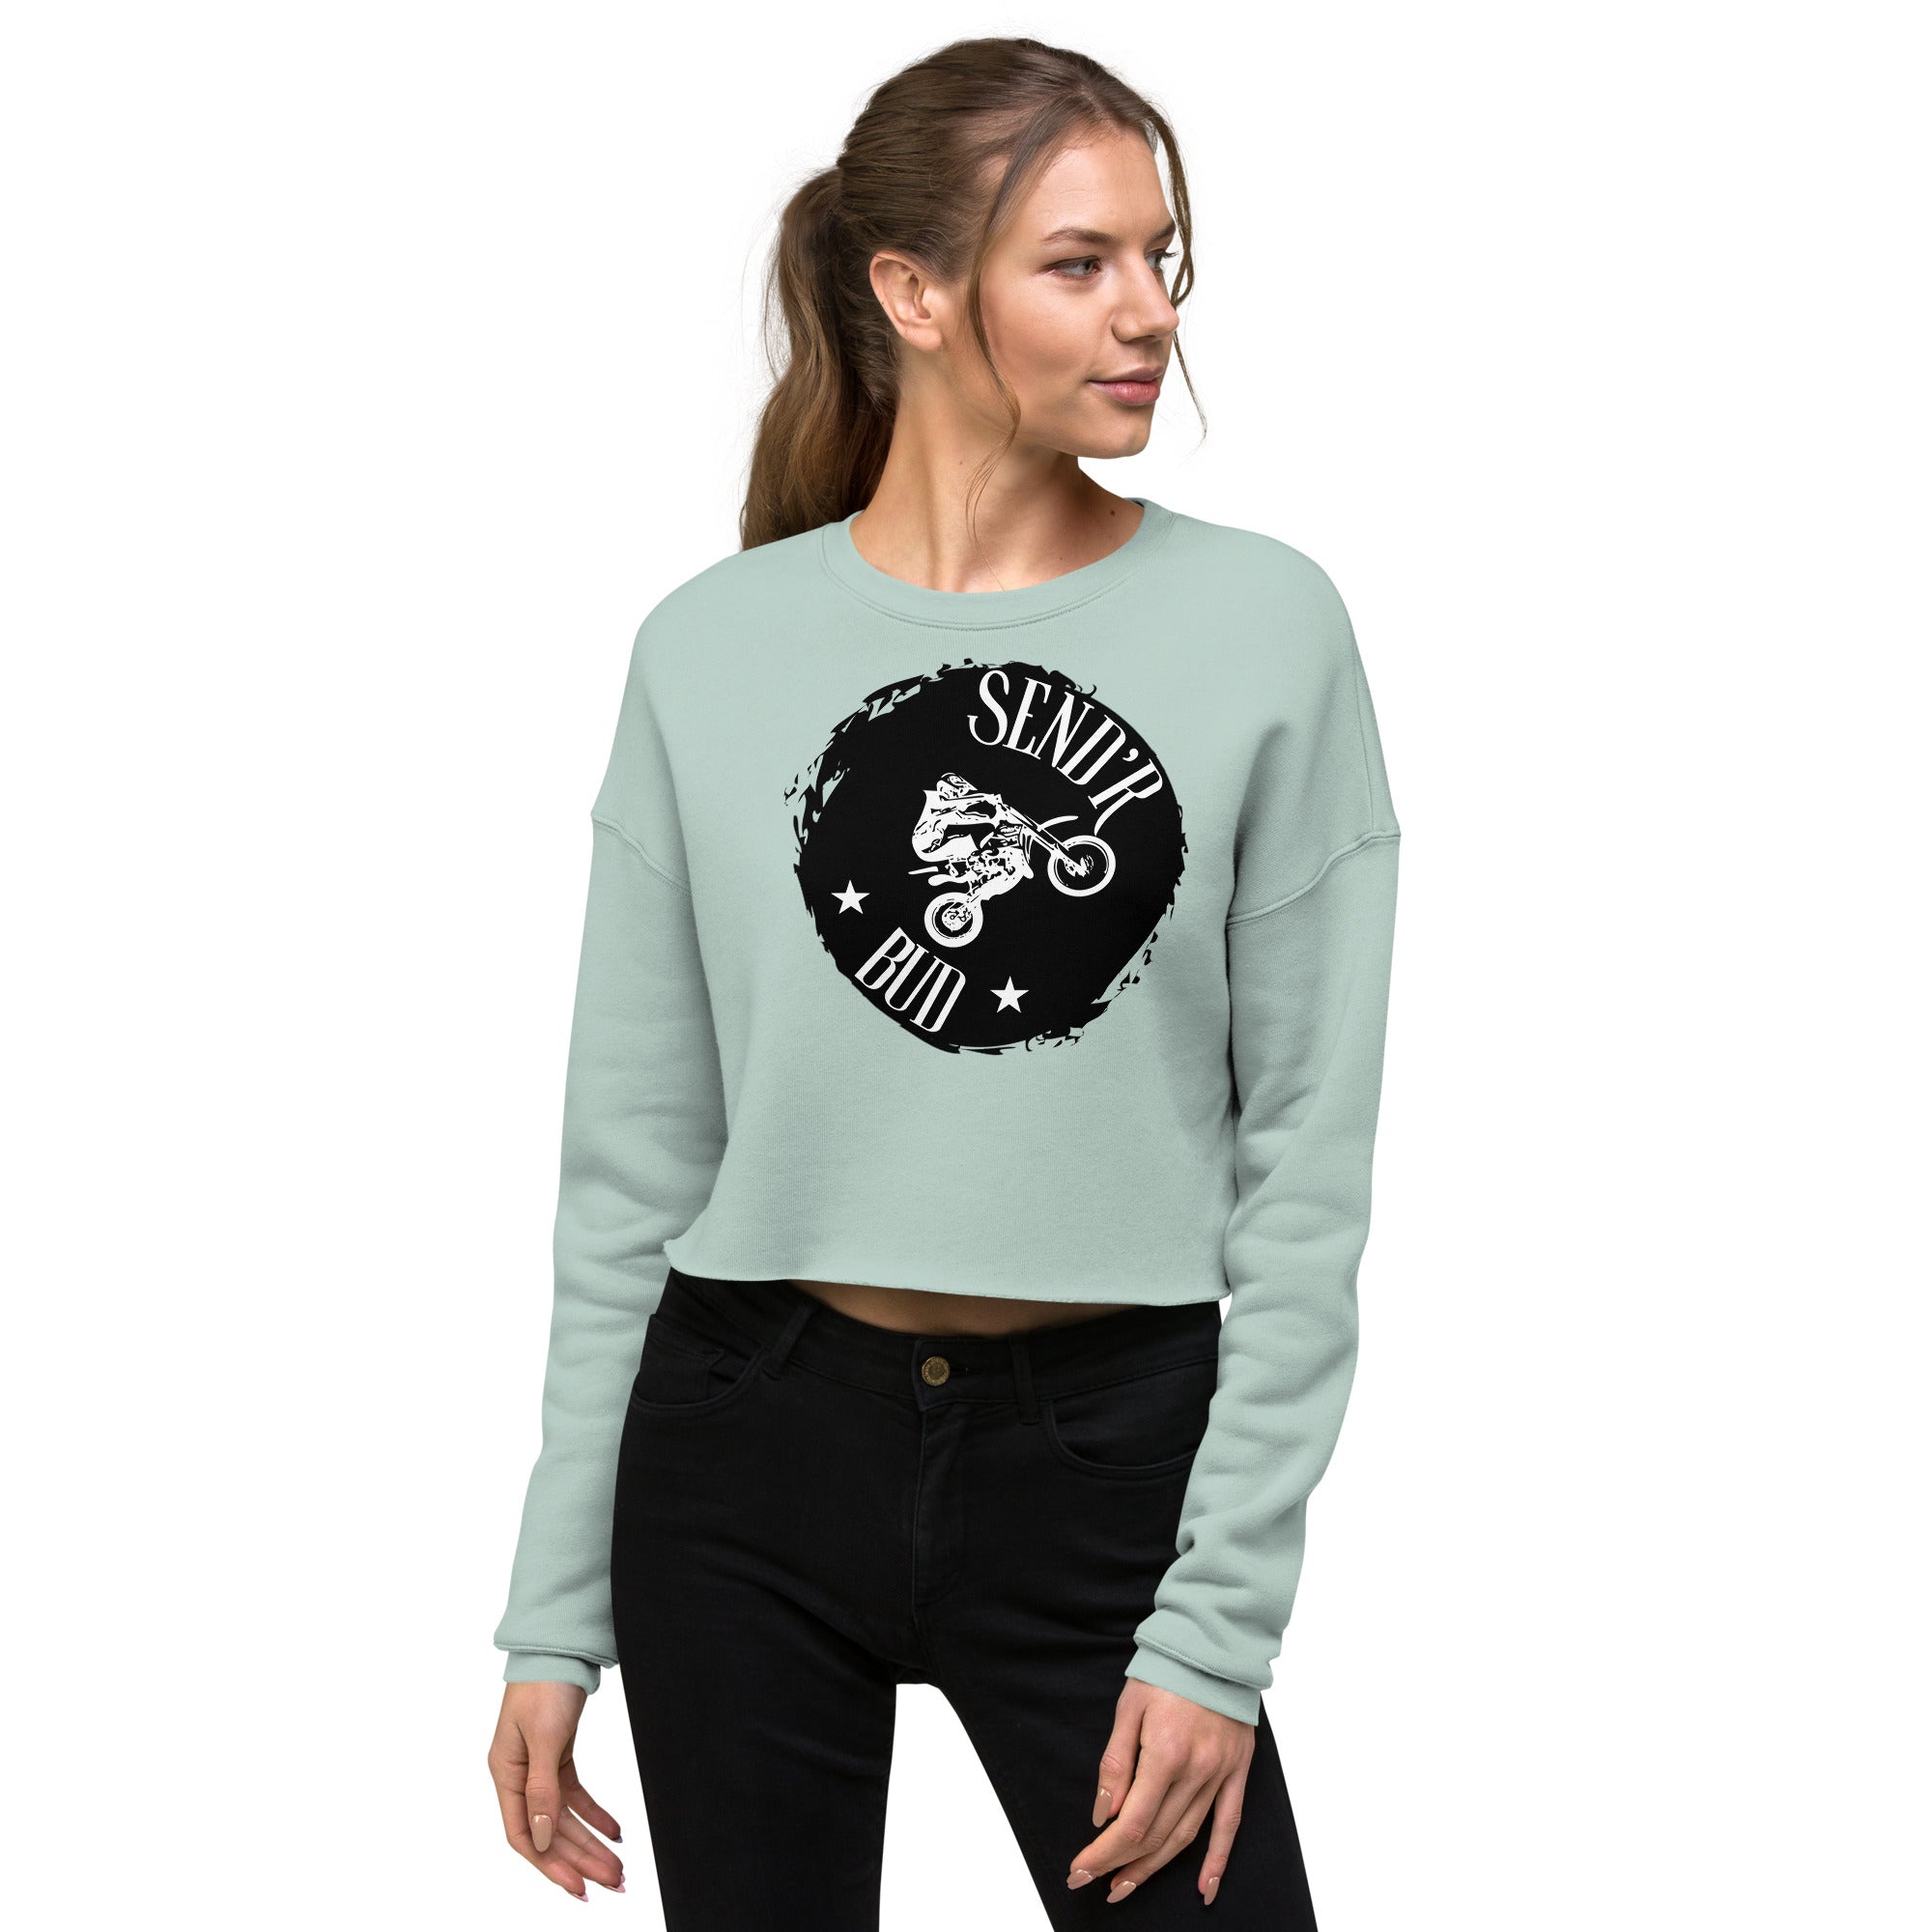 Send'r Bud Women's Crop Sweatshirt